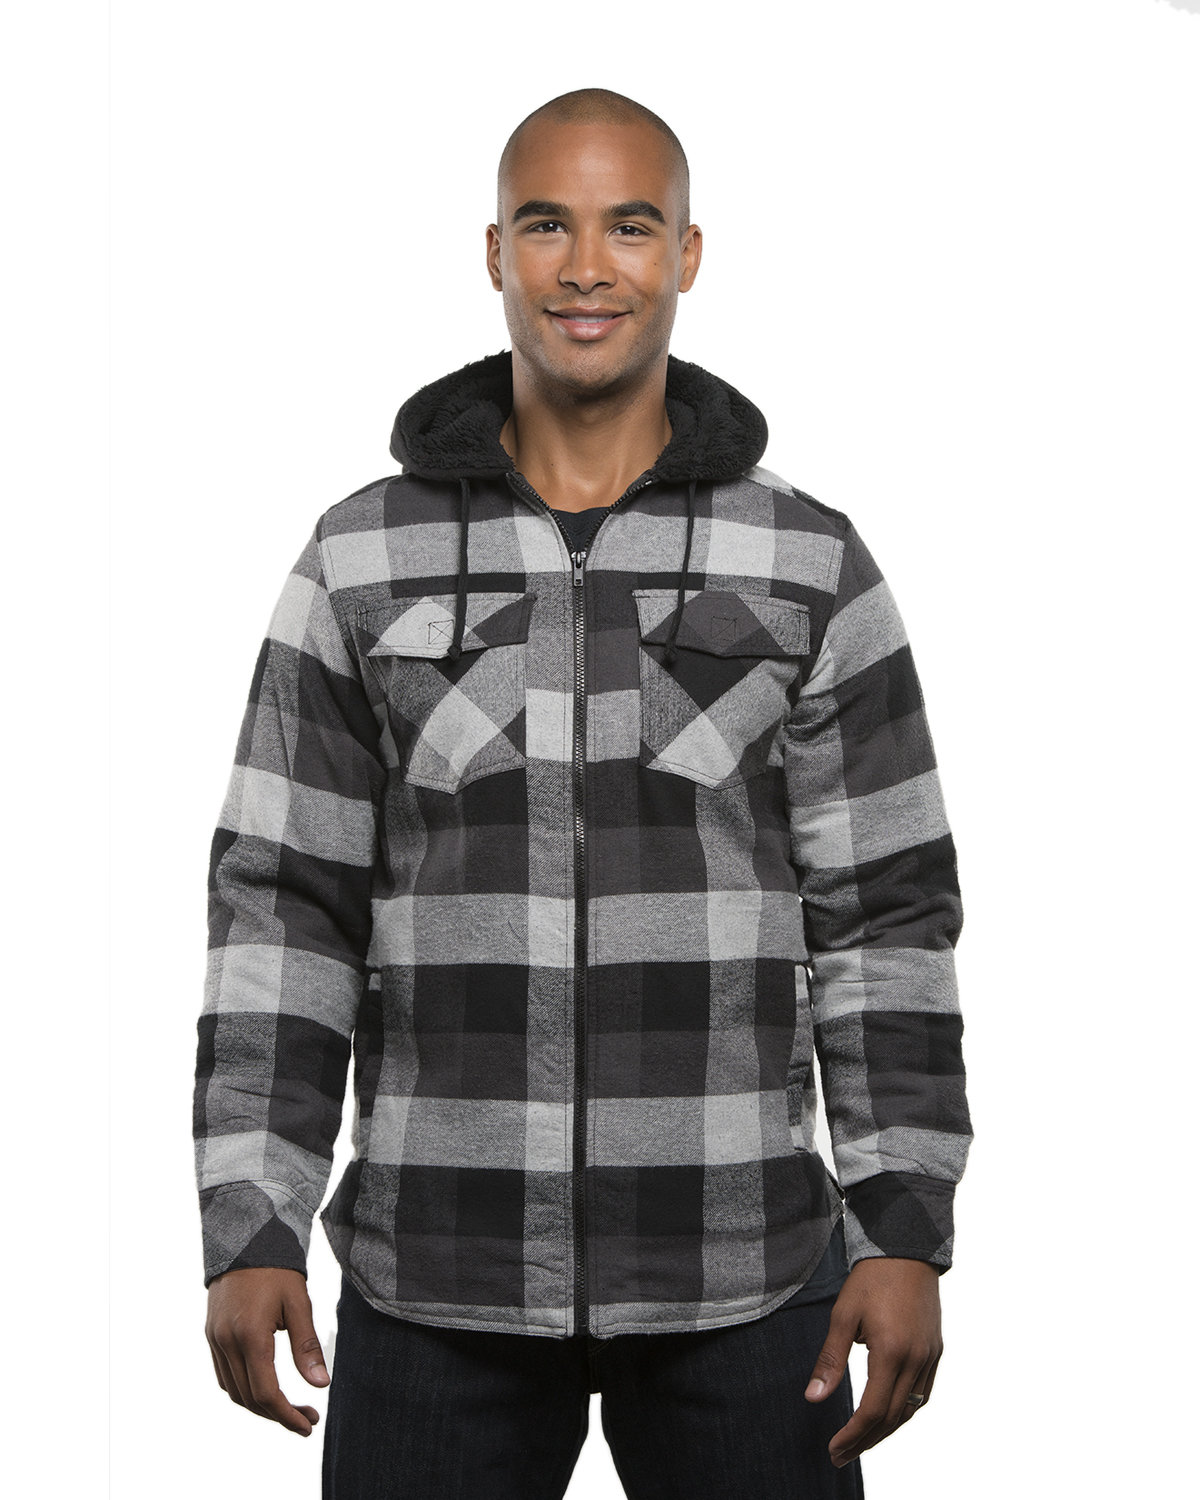 Buy Mens Hooded Flannel Jacket - Burnside Online at Best price - OK